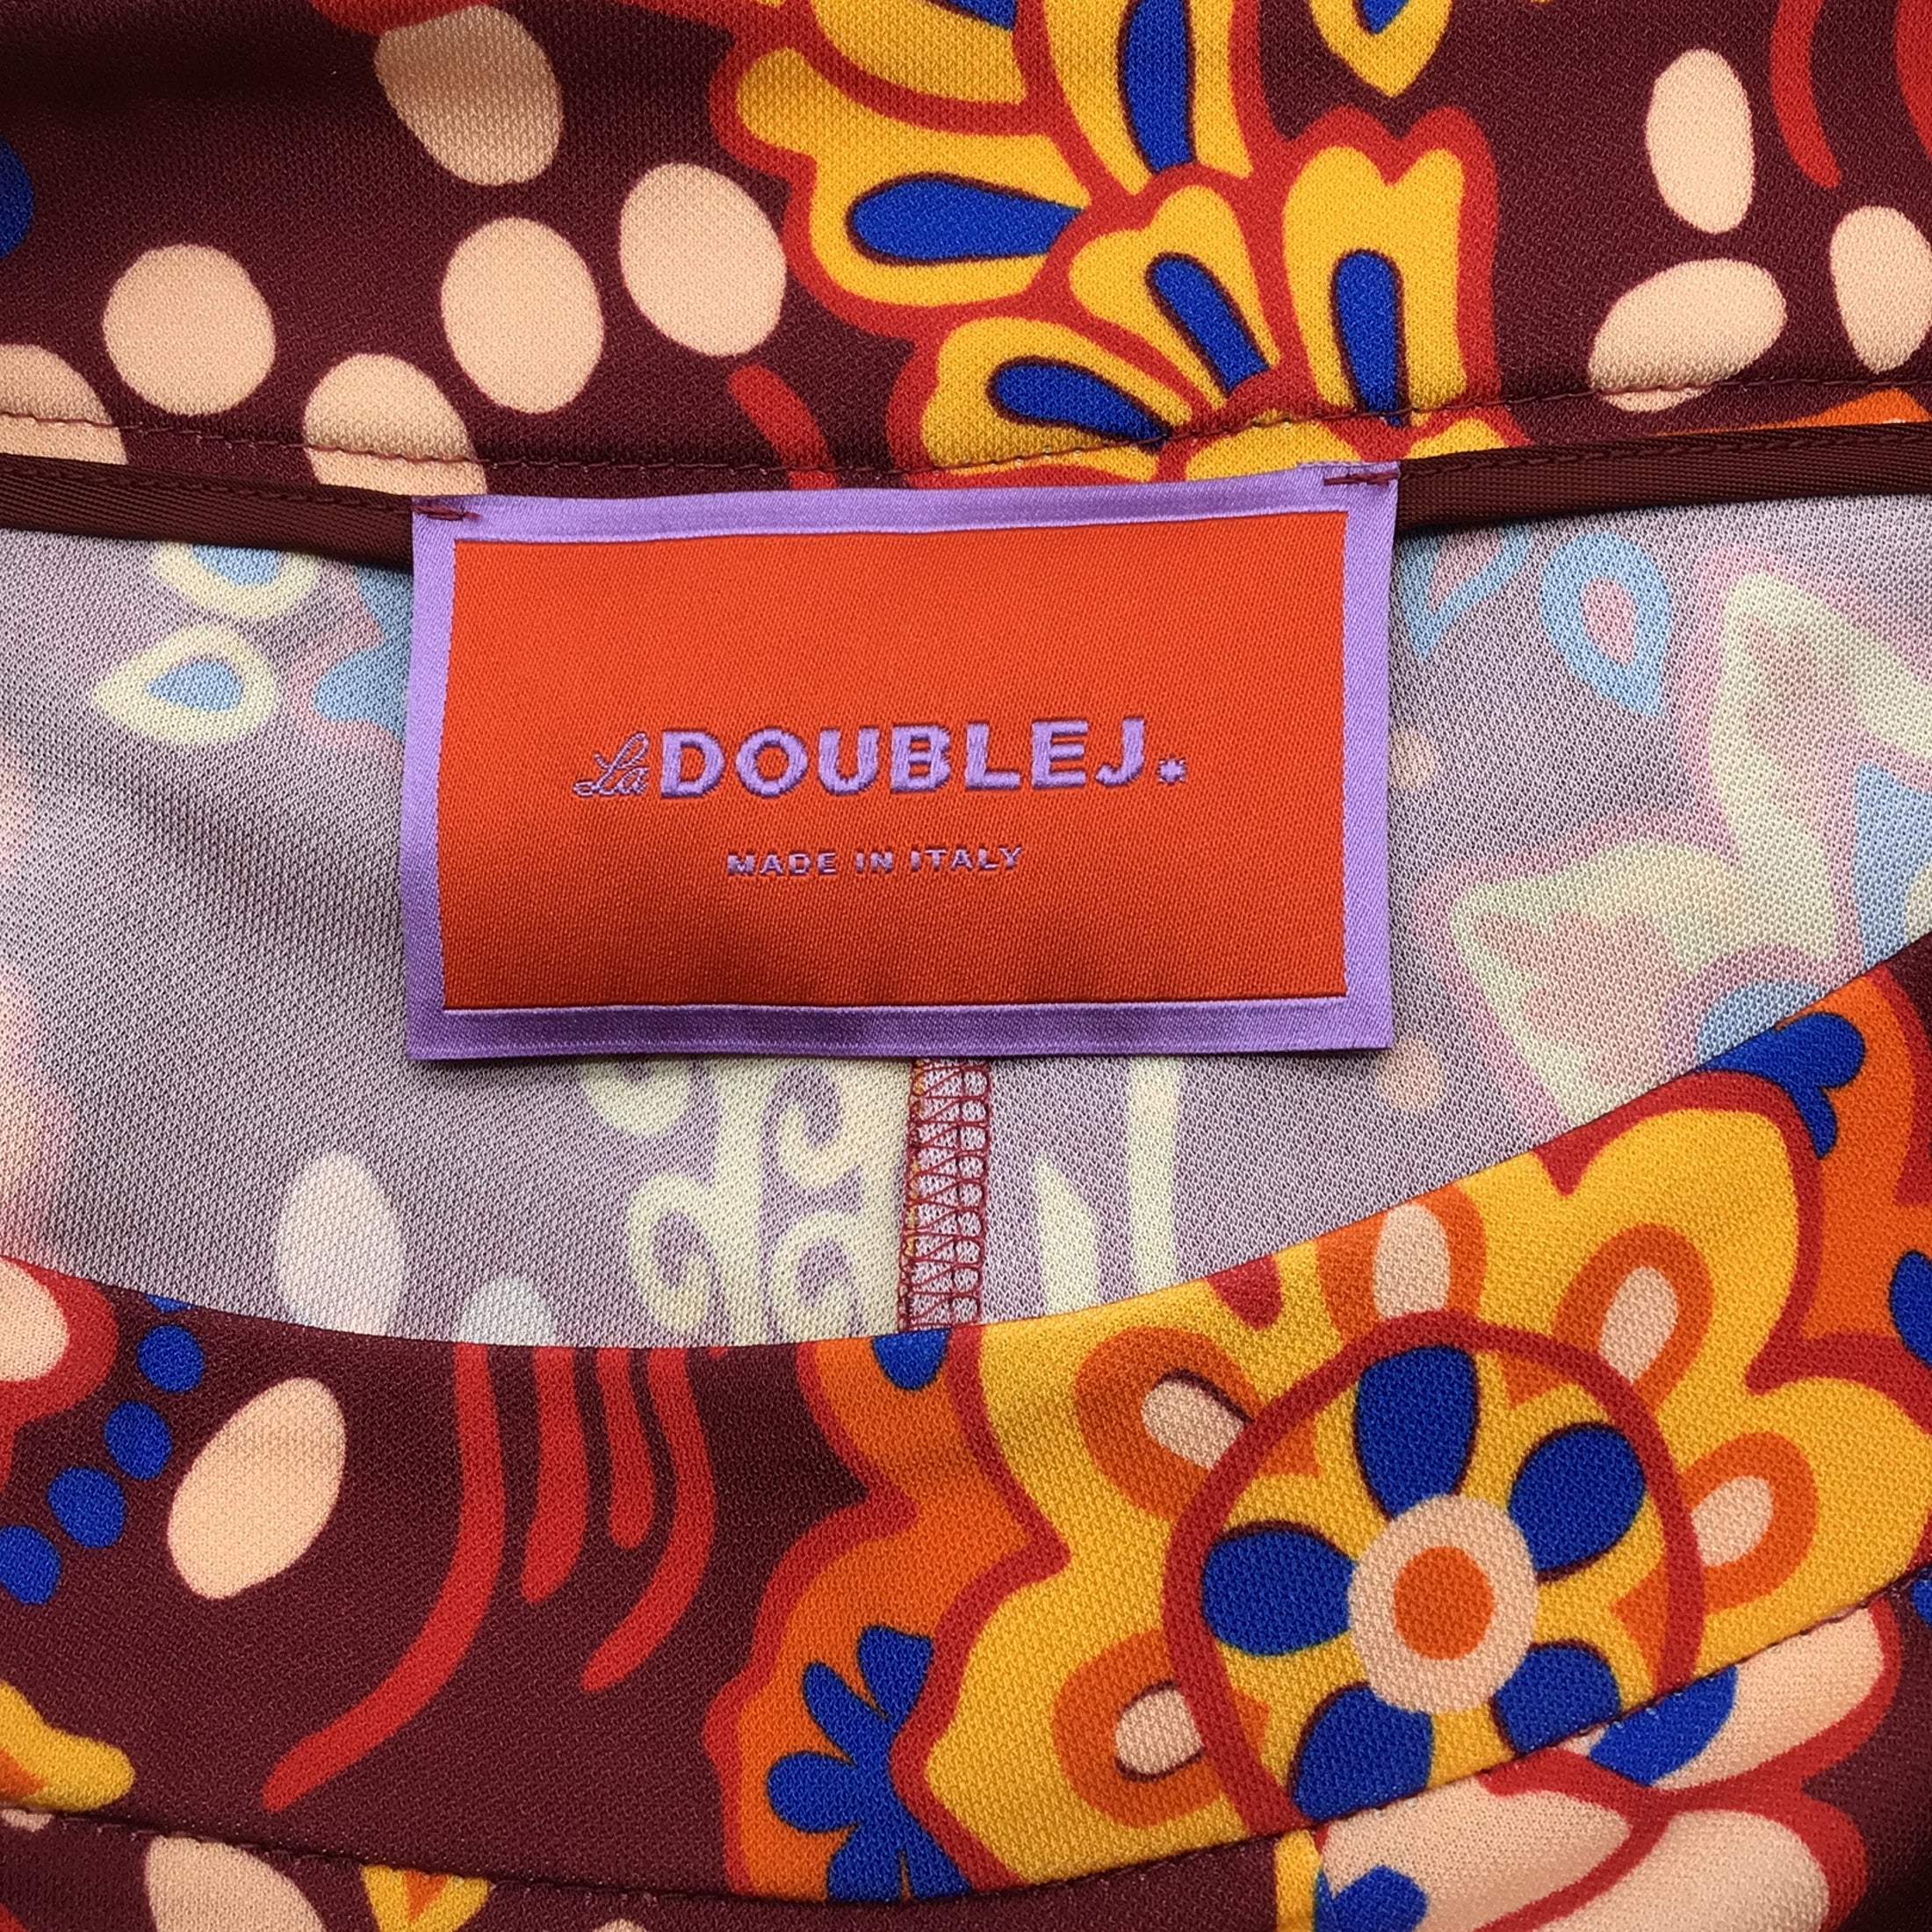 La DoubleJ Red / Orange Multi Printed Jersey Stretch Pants